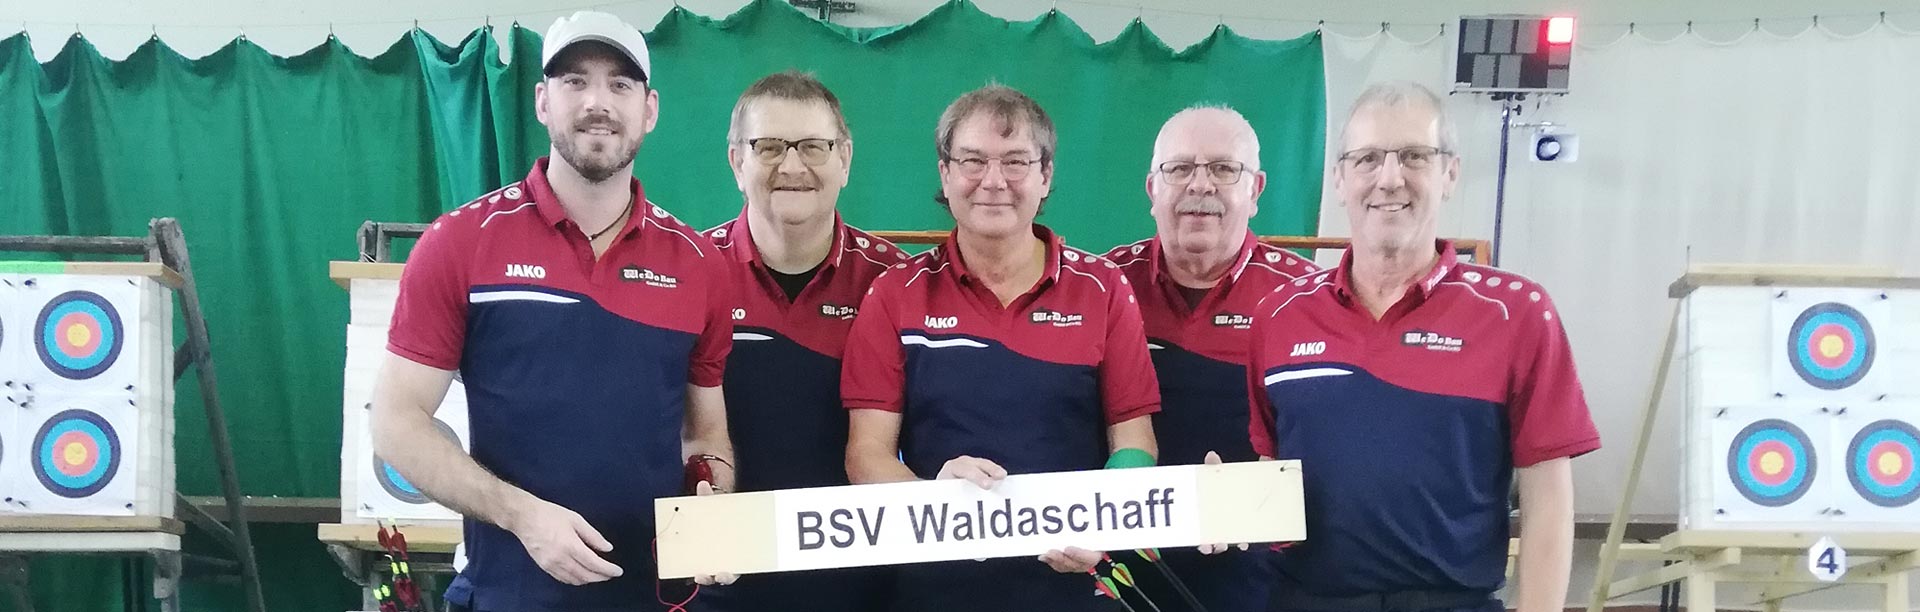 Liga-Team des Bogen-Sport-Vereins Waldaschaff e.V.